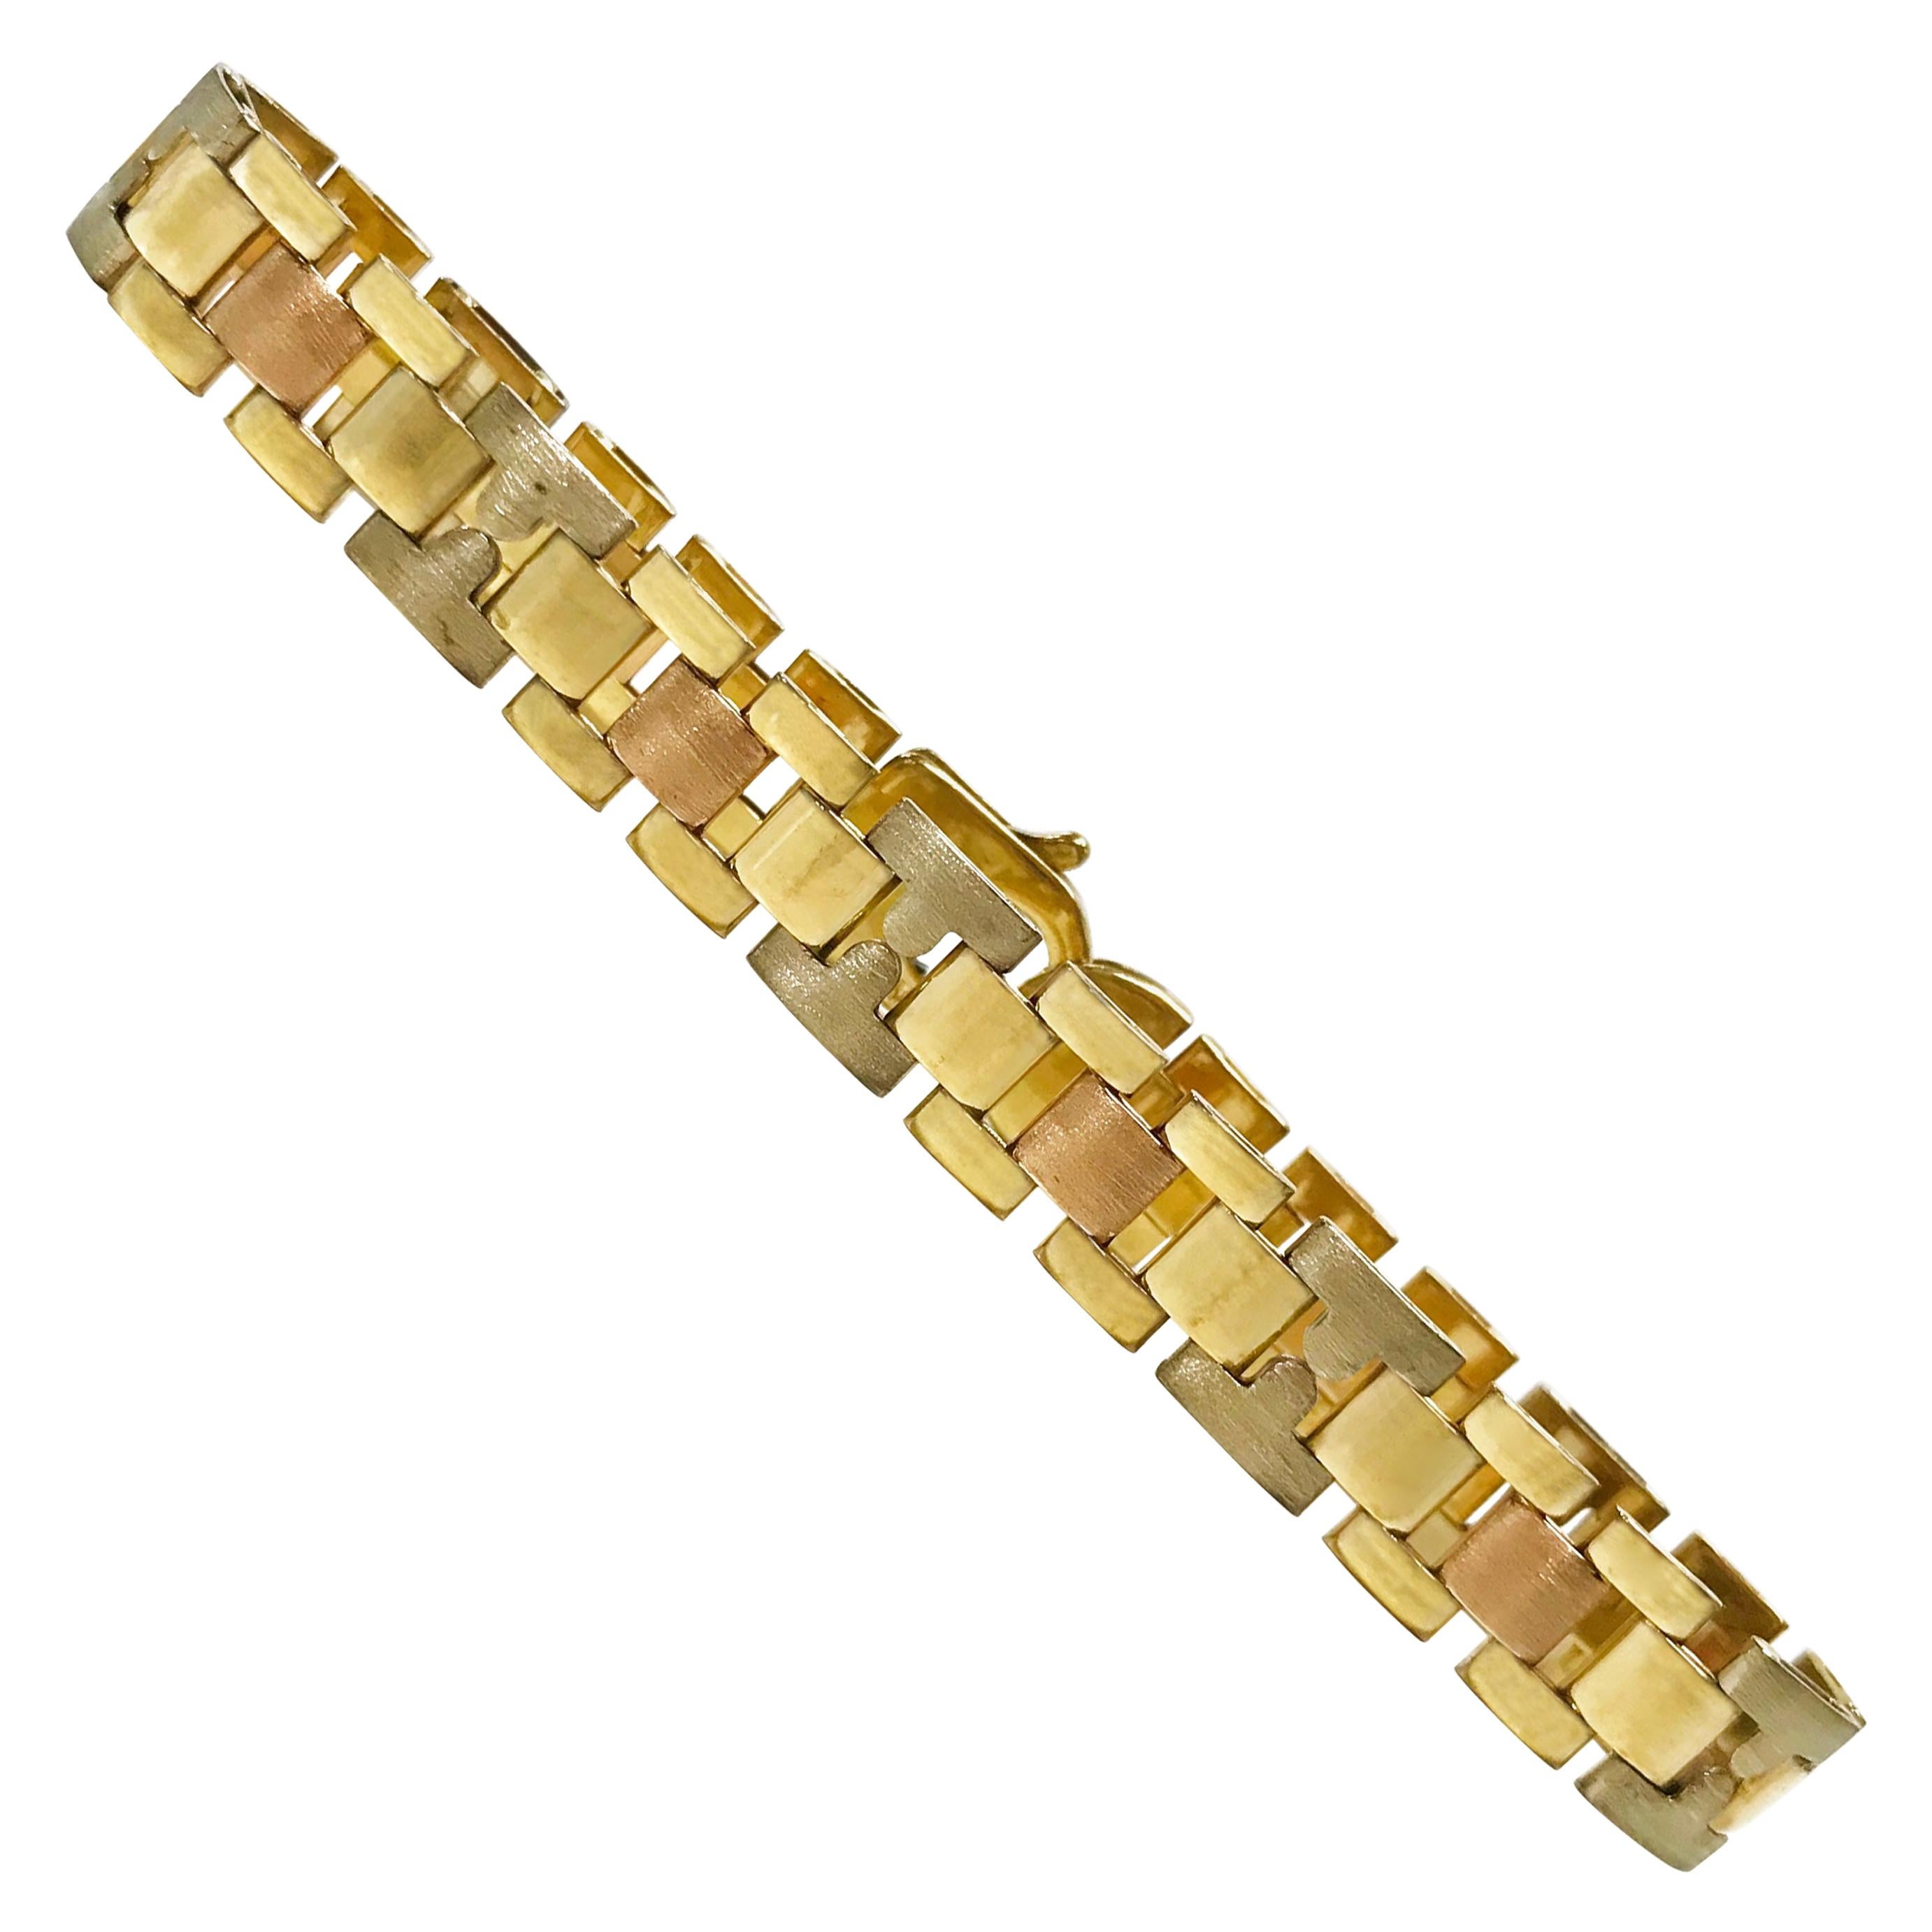 14 Karat Two-Tone Link Bracelet